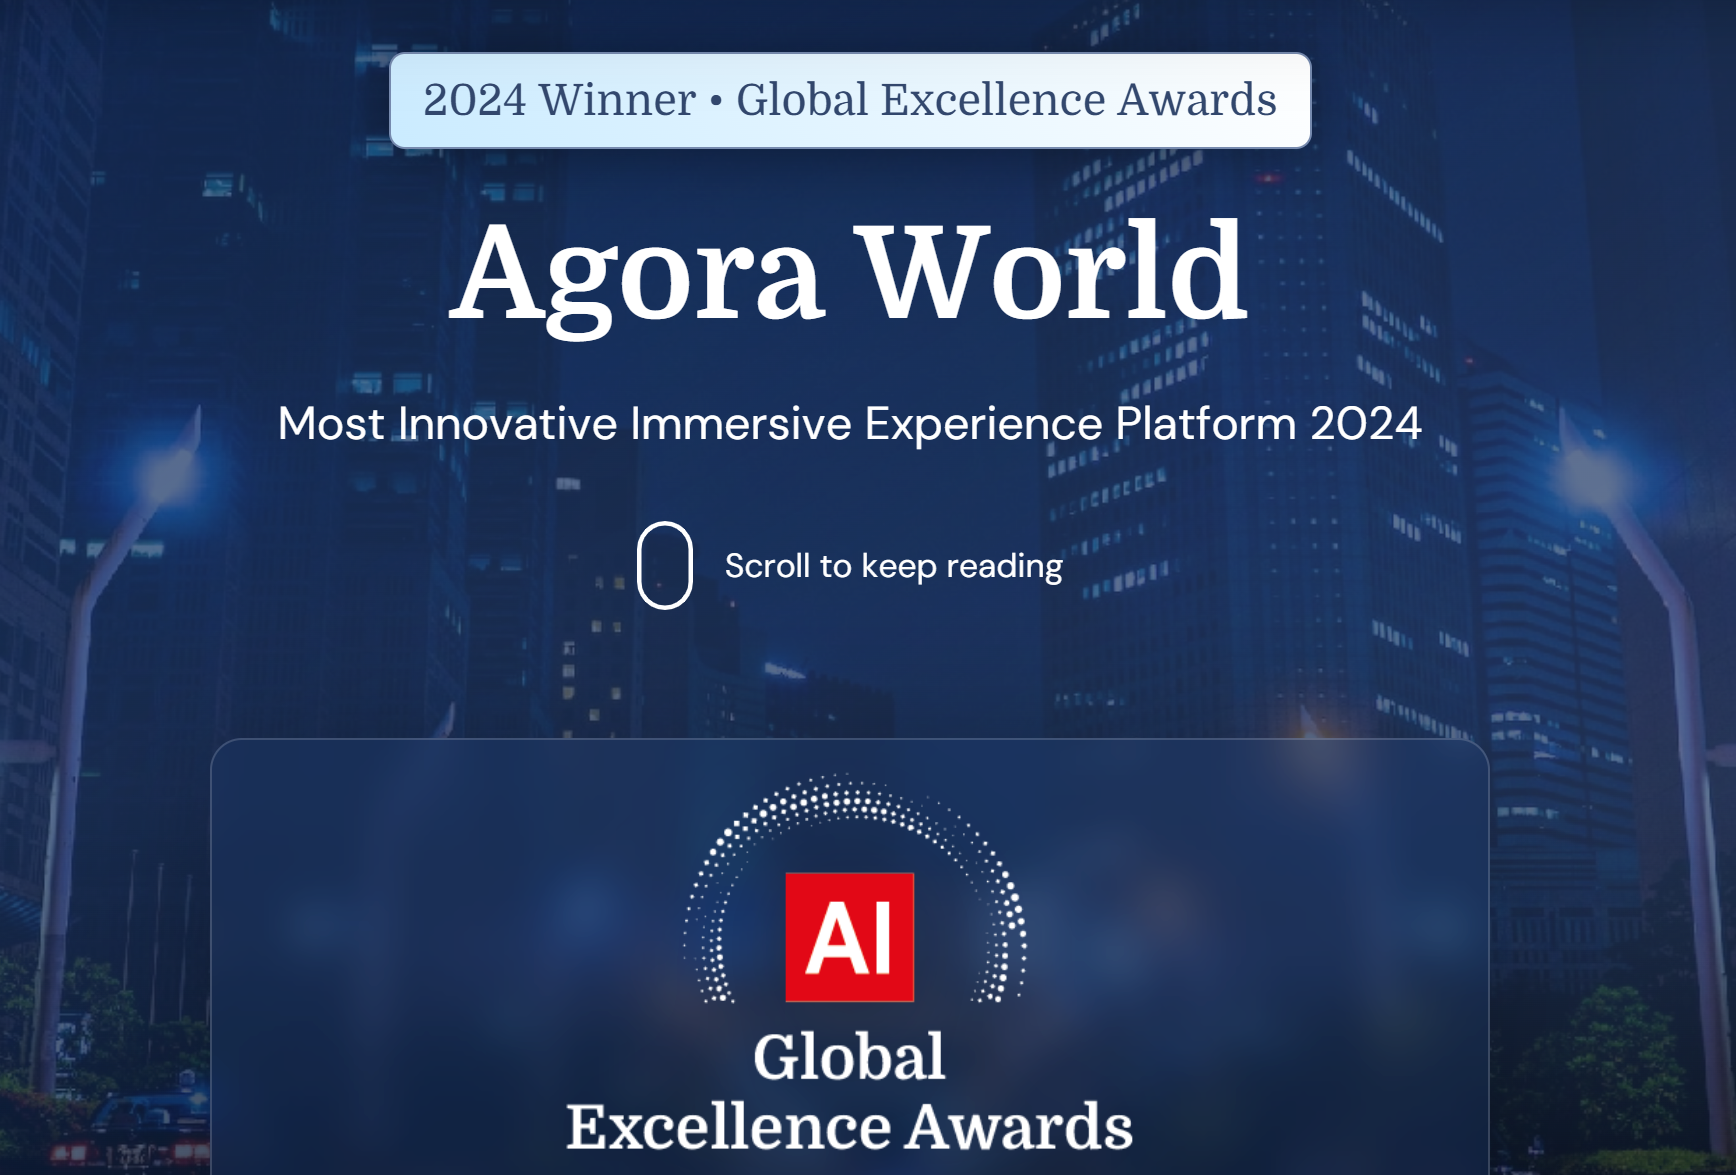 2024 Winner • Global Excellence Awards
Agora World
Most Innovative Immersive Experience Platform 202